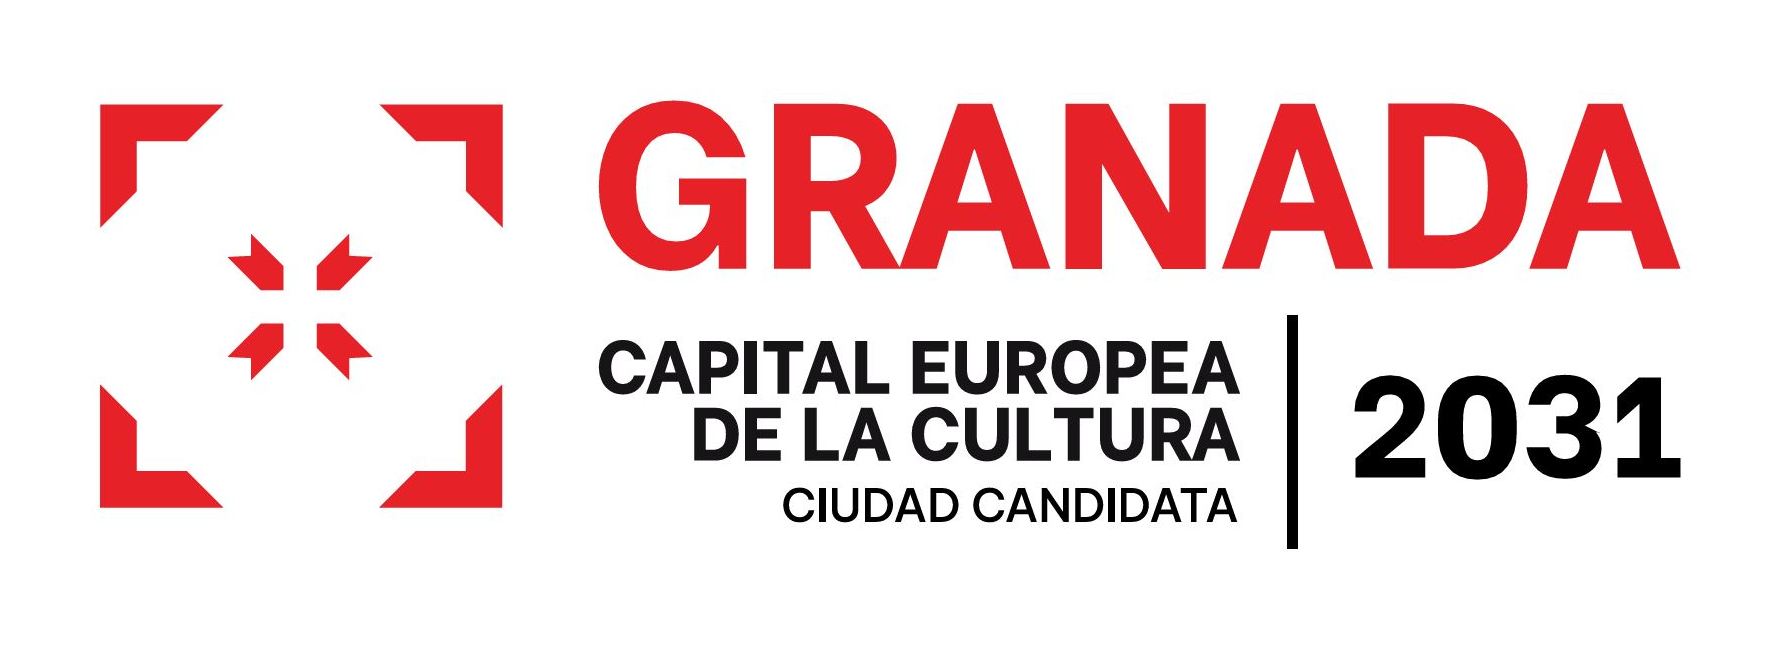 Logo Granada Candidata a Ciudad Europea de la Cultura